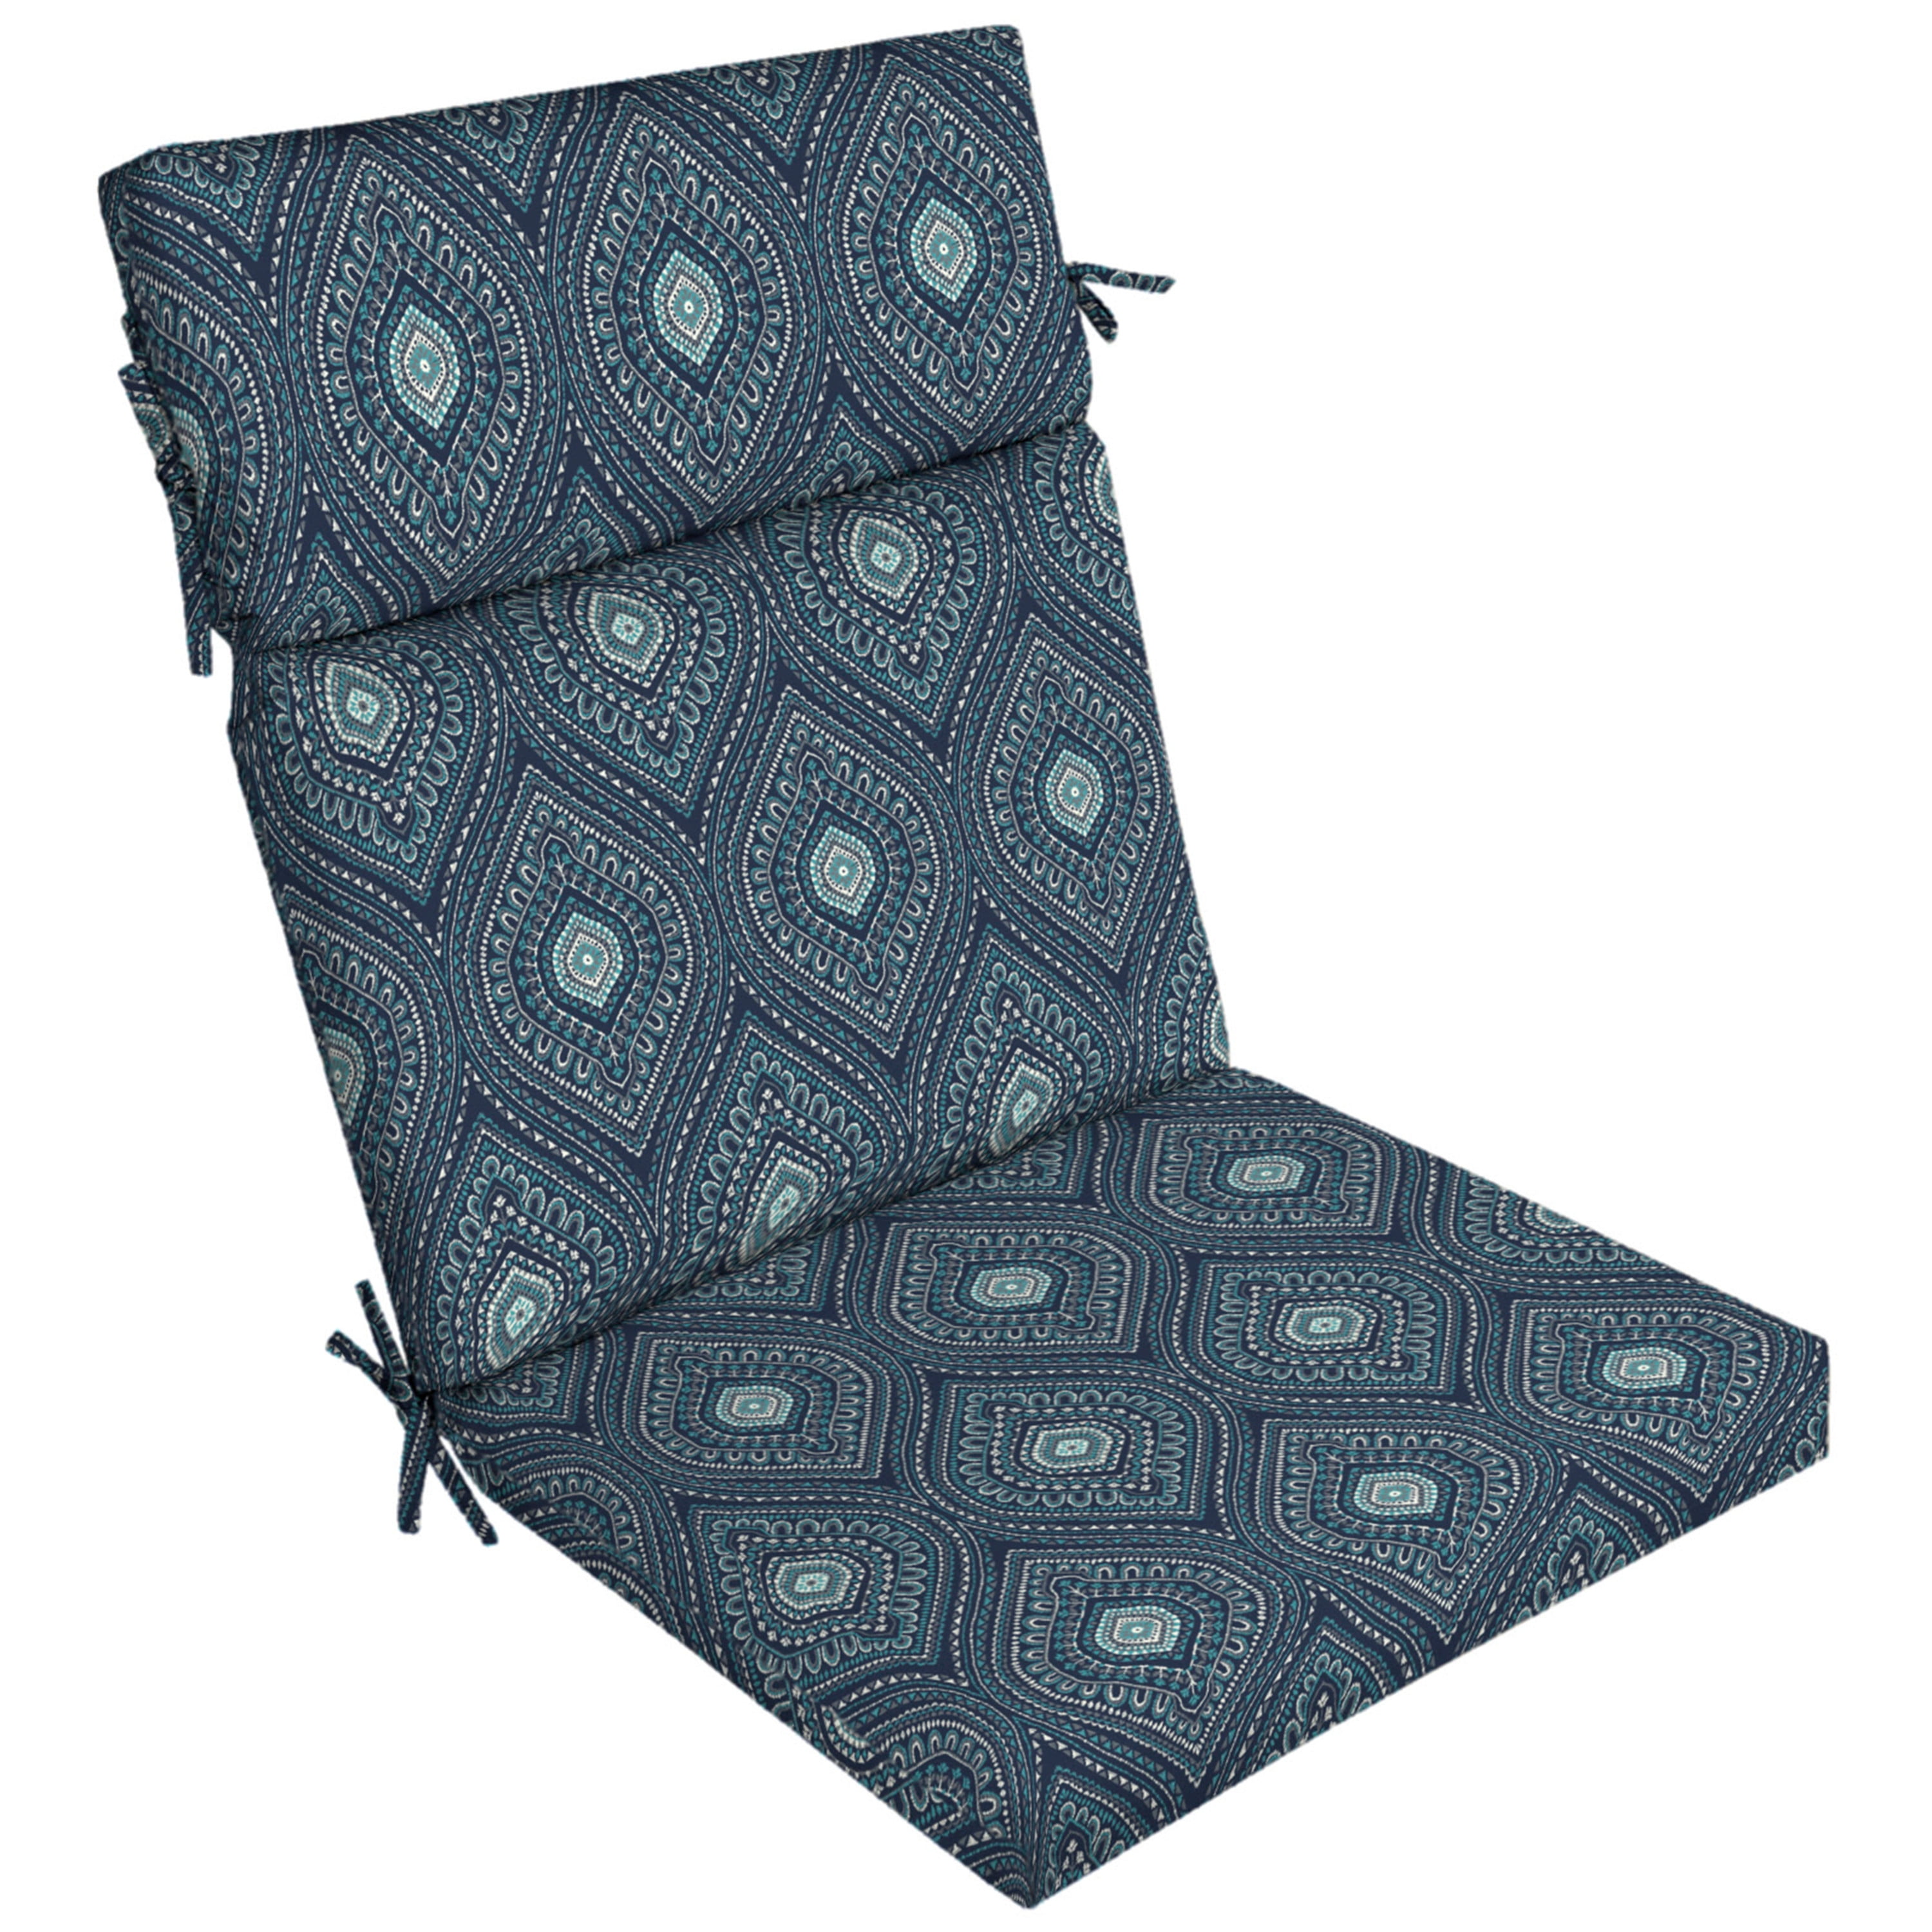 Better Homes & Gardens 44" x 21" Blue Medallion Rectangle Outdoor Chair Cushion, 1 Piece